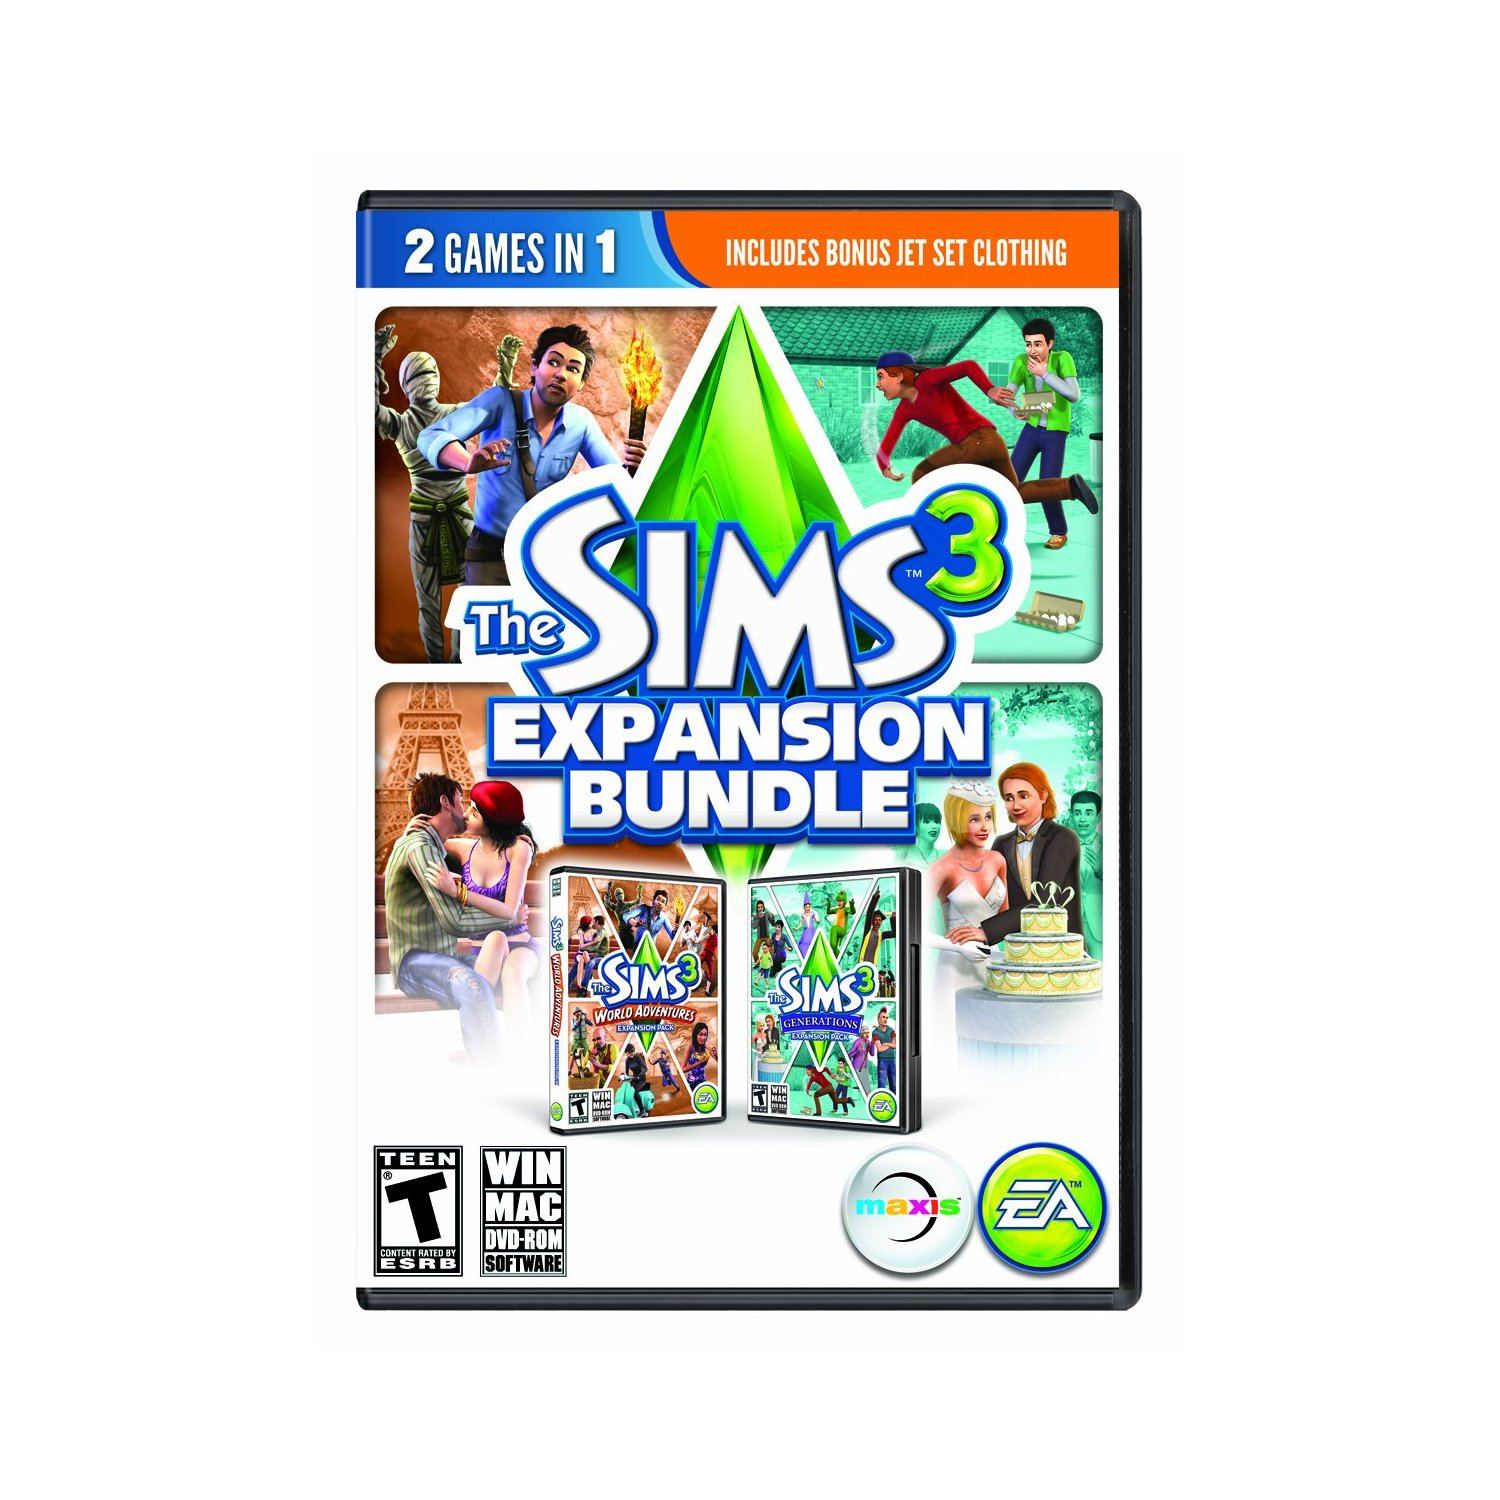 sims 3 expansion packs free